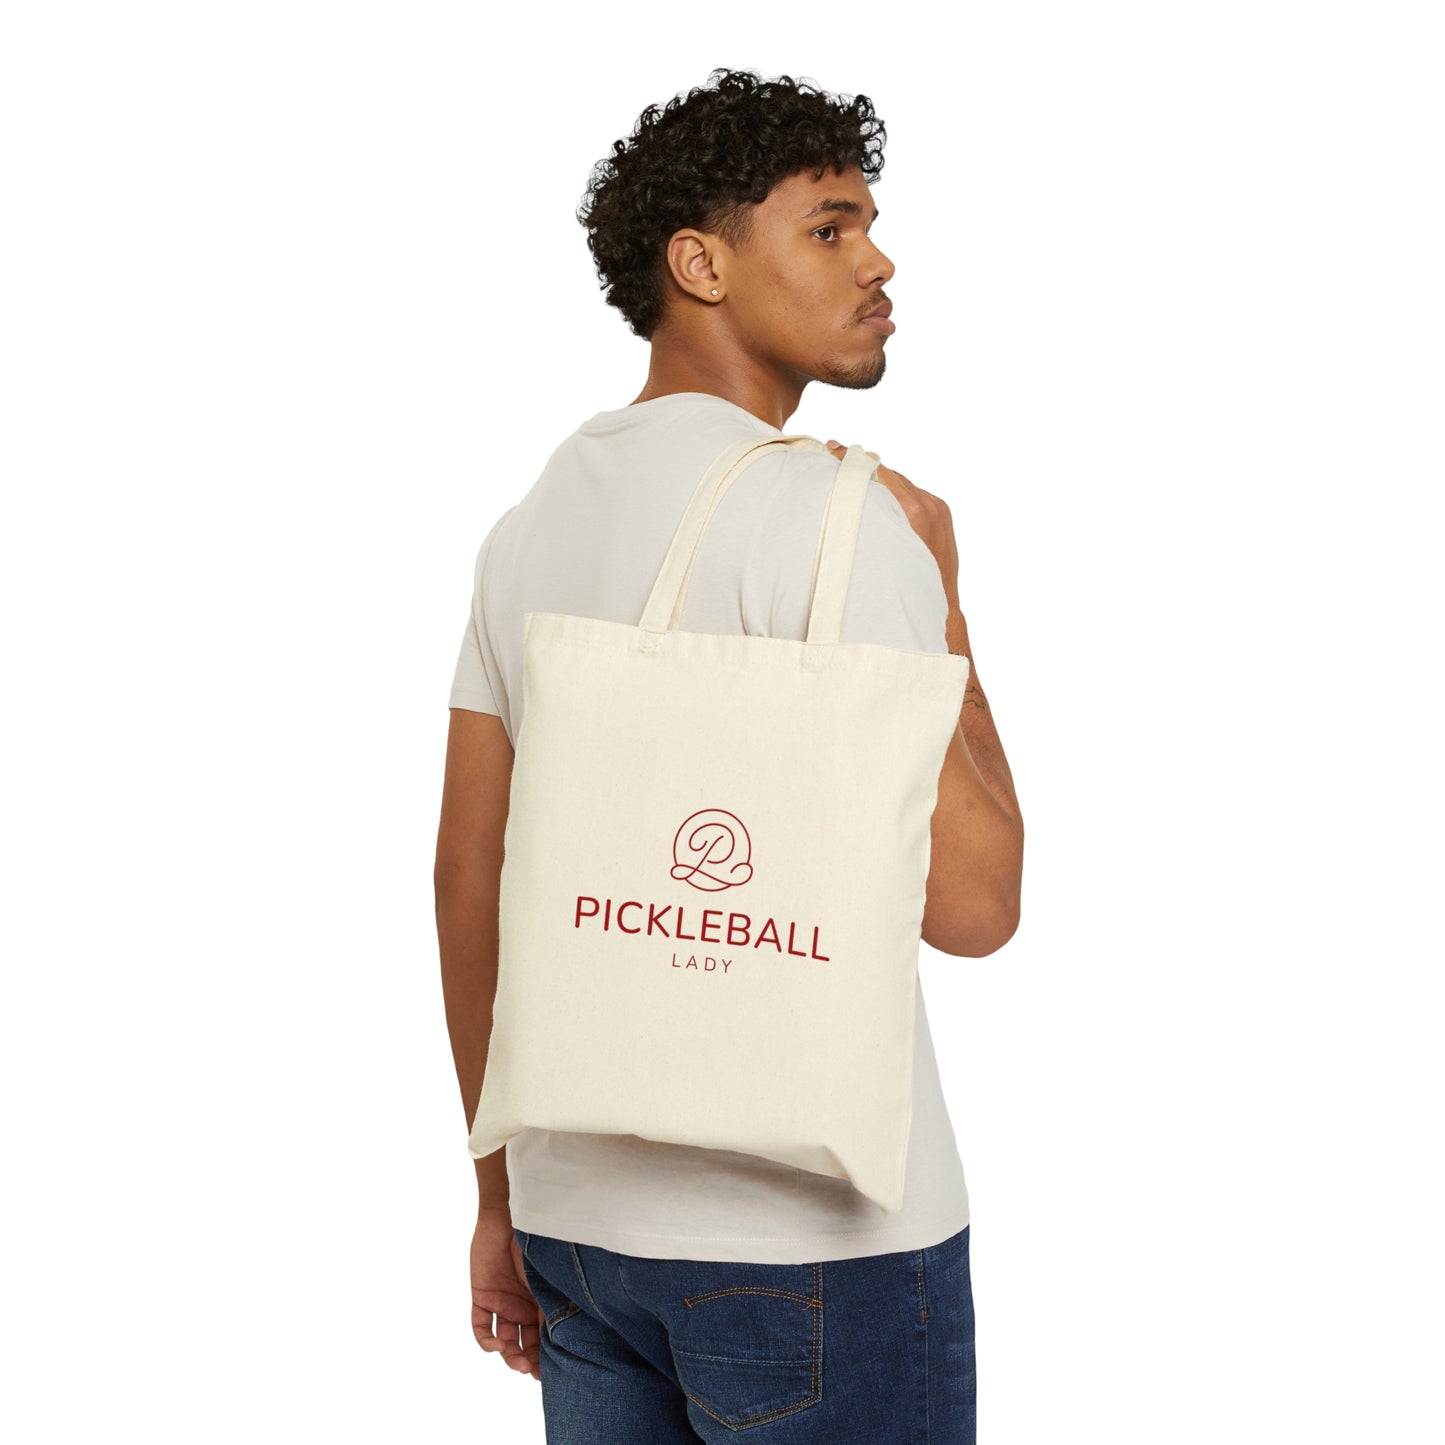 Pickleball Lady Canvas Tote Bag